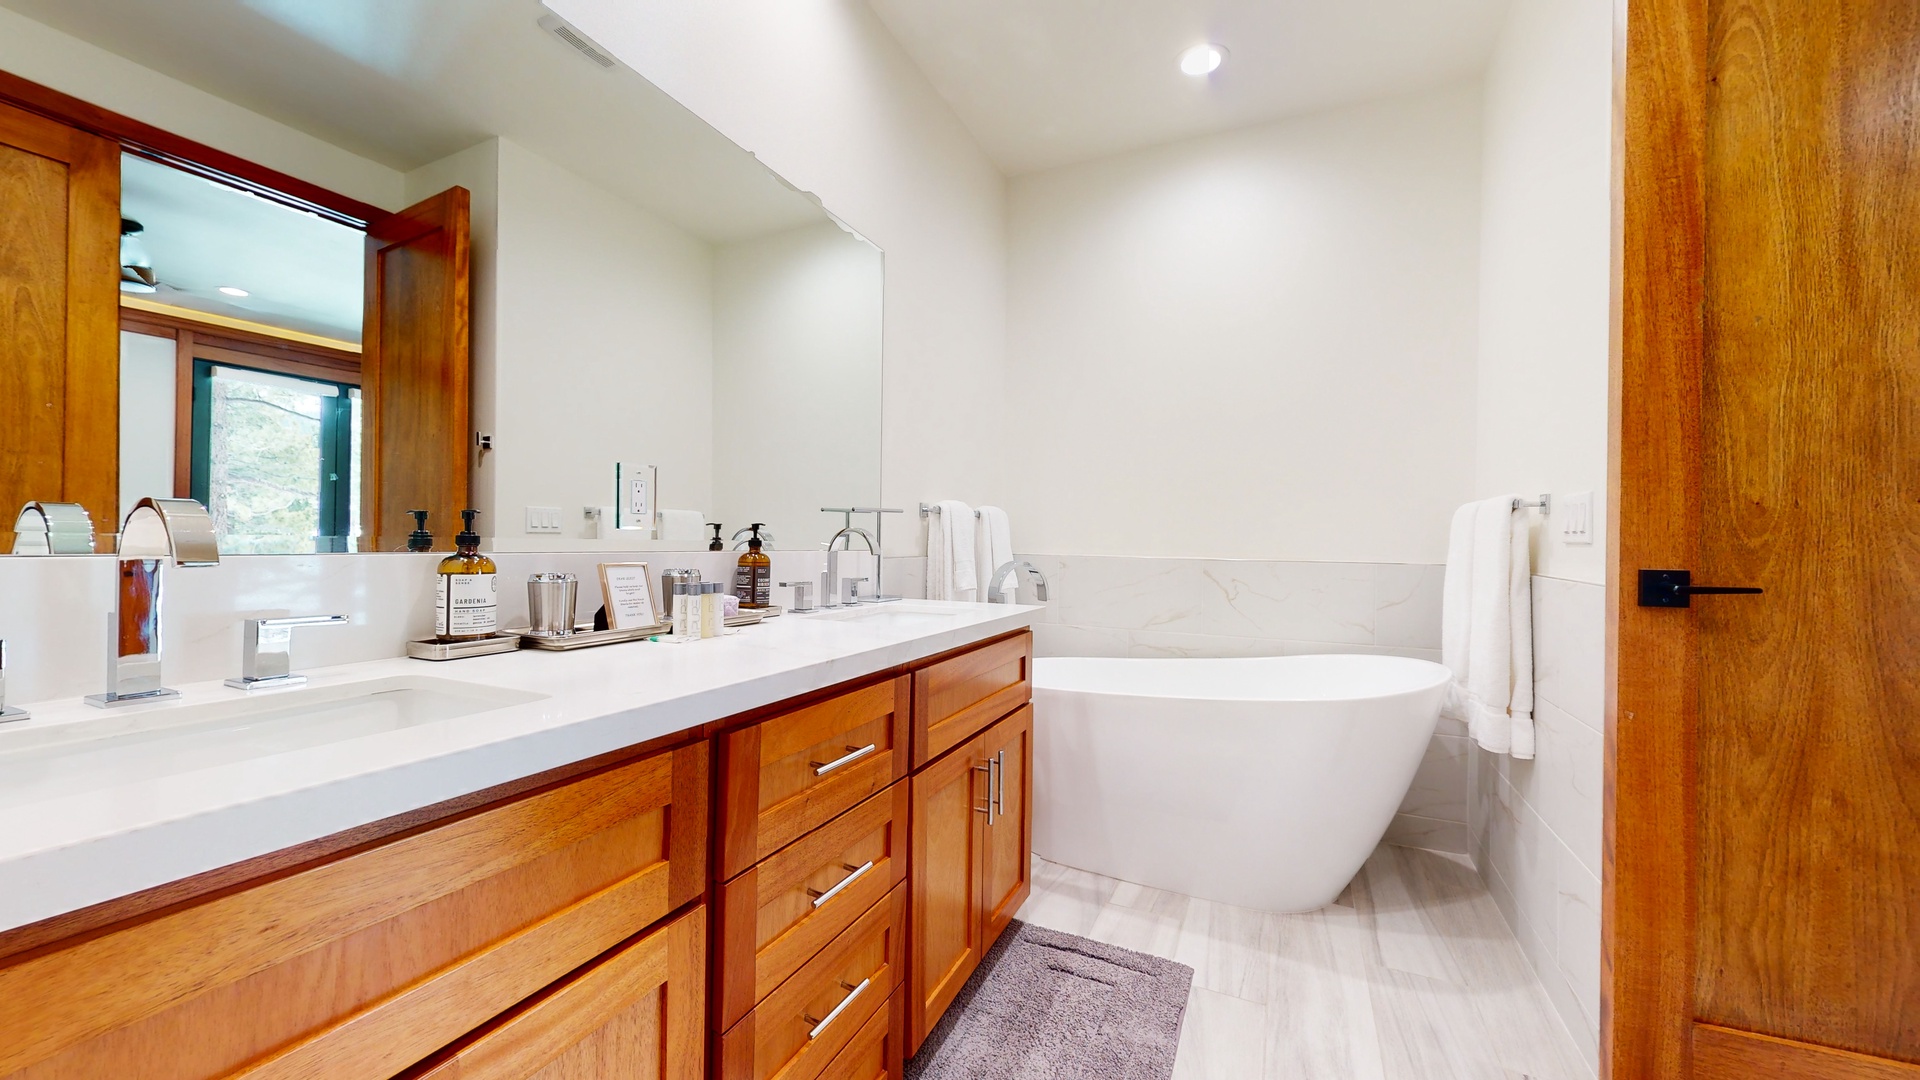 The 3rd floor en suite boasts a sleek double vanity, glass shower, and soaking tub